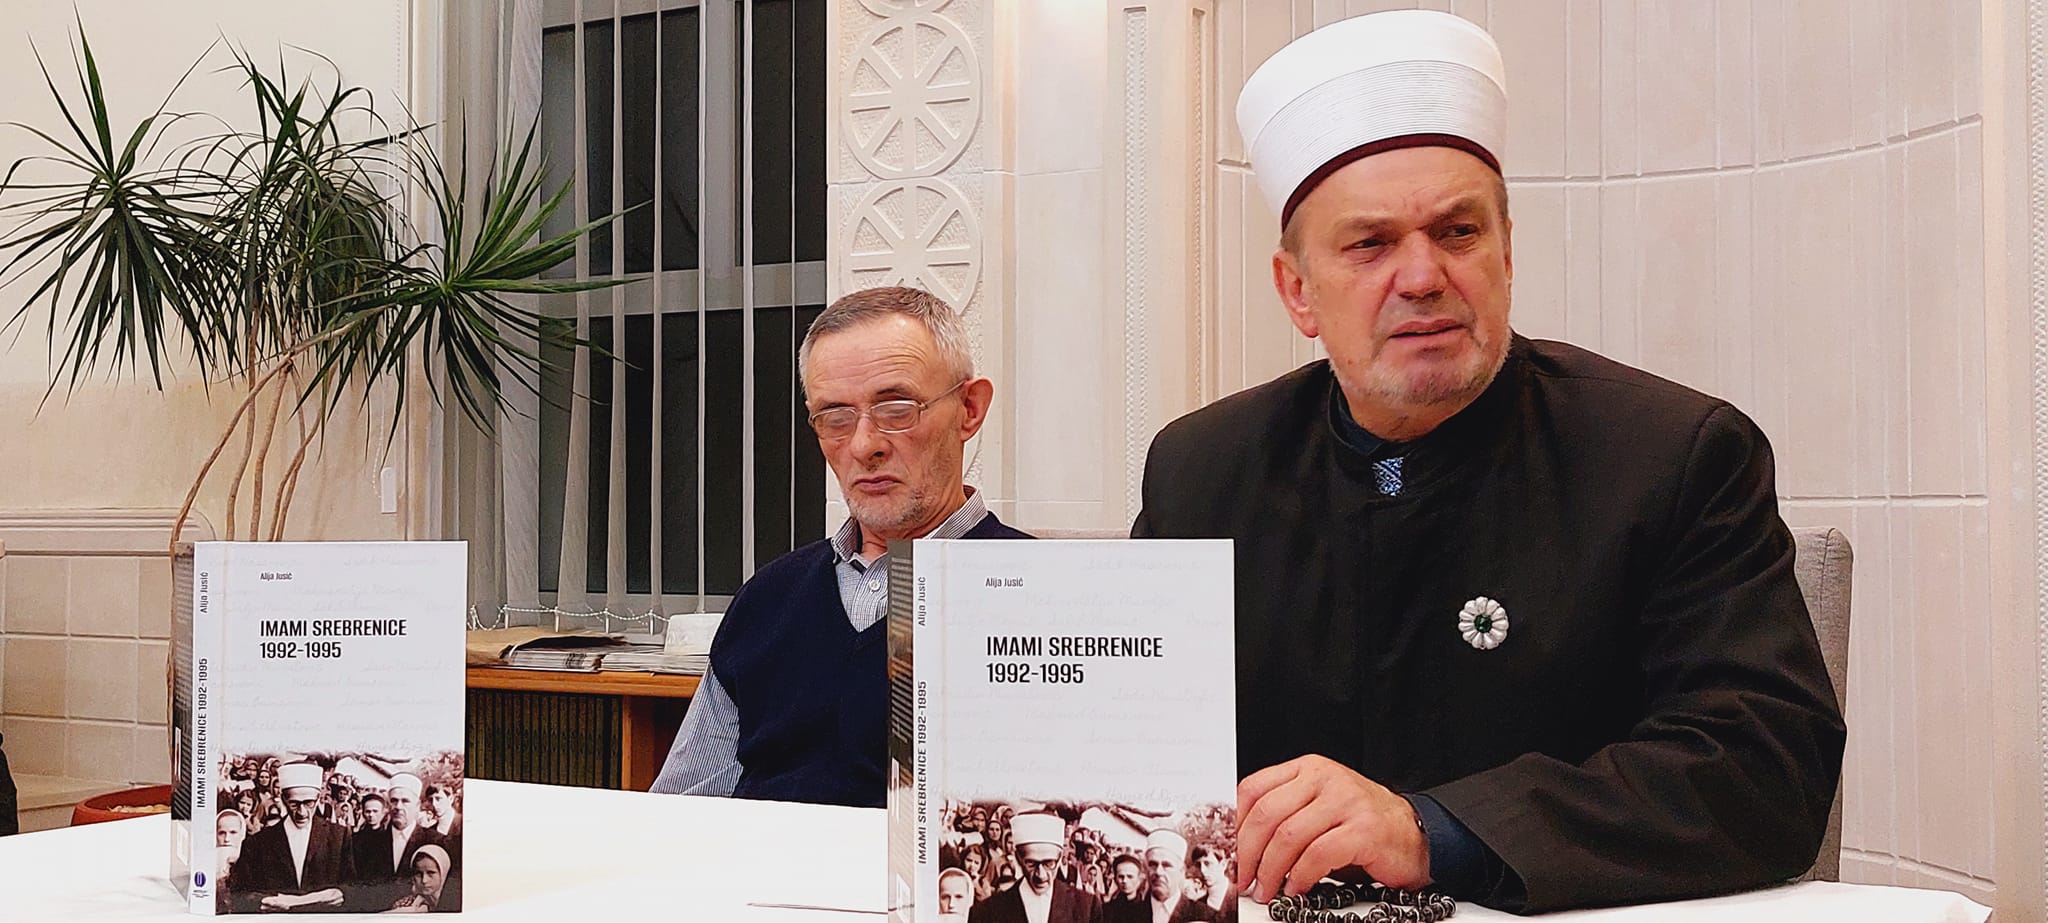 Održana promocija knjige „Imami Srebrenice (1992-1995) memorizacija kao zavjet i opomena“